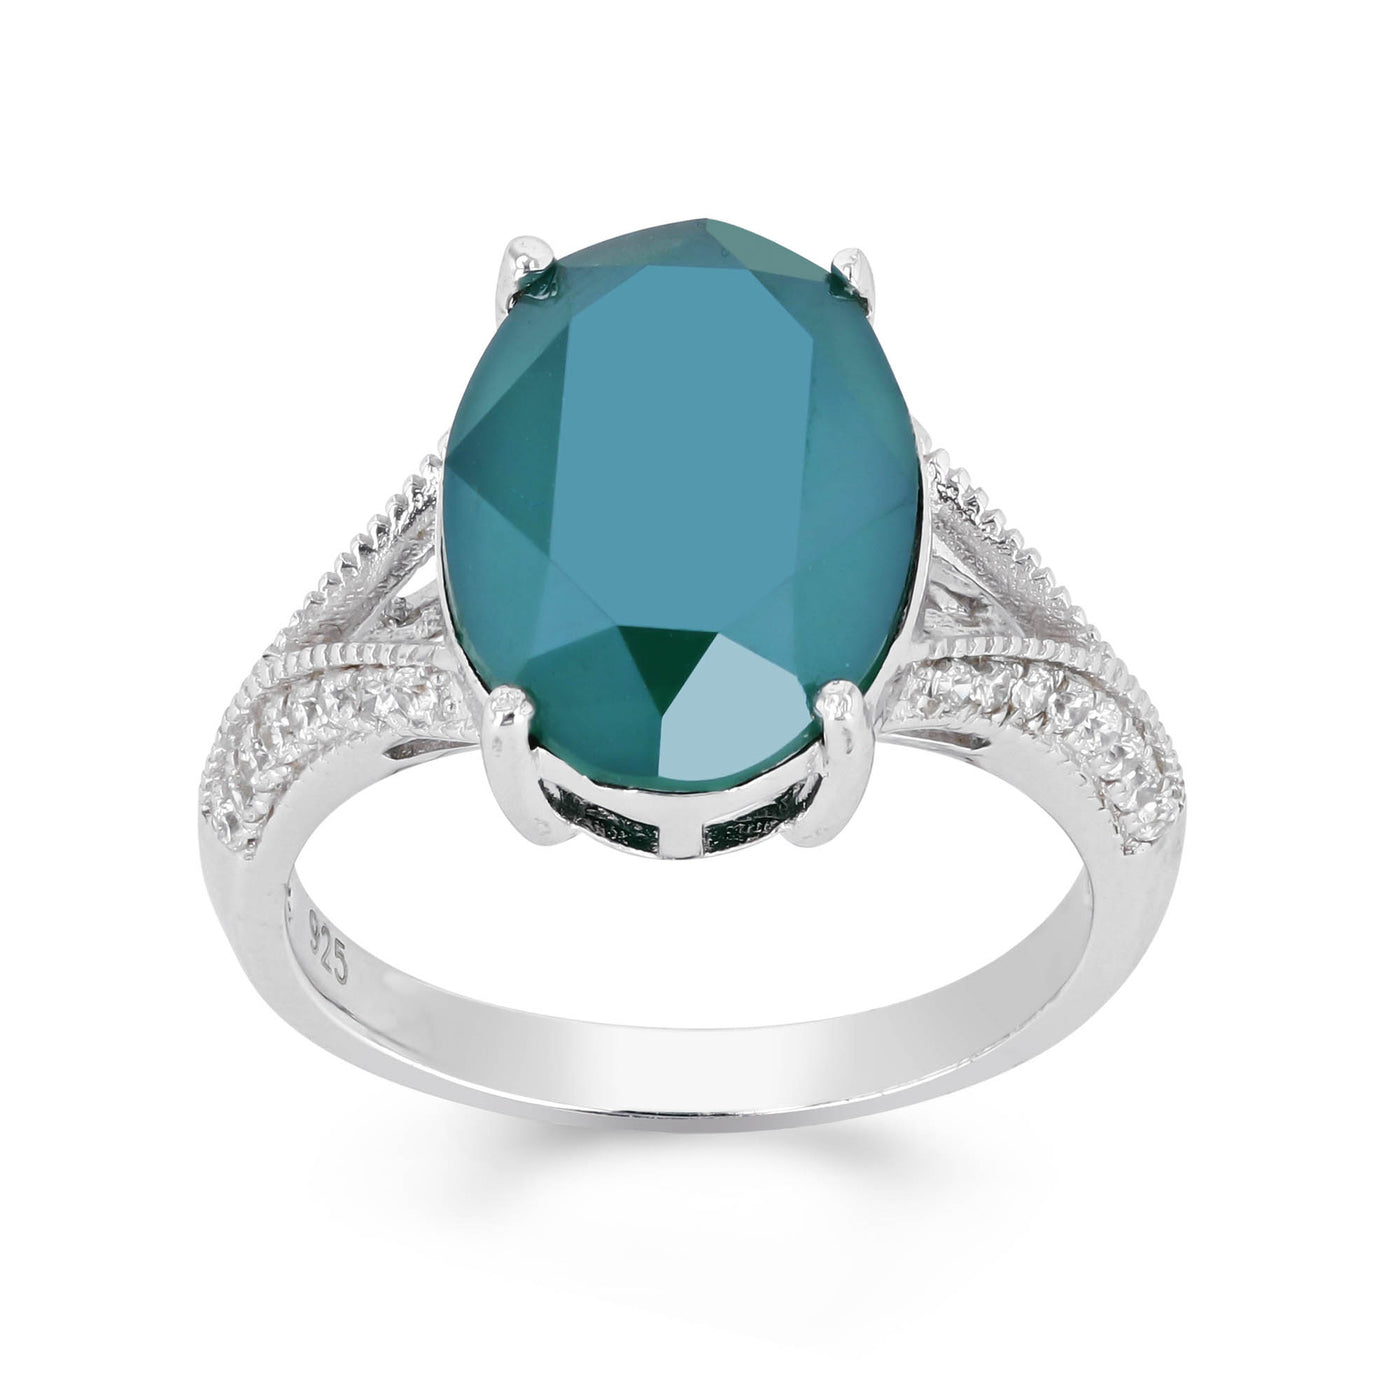 Rebecca Sloane Silver Oval Cut Royal Green Crystal Ring